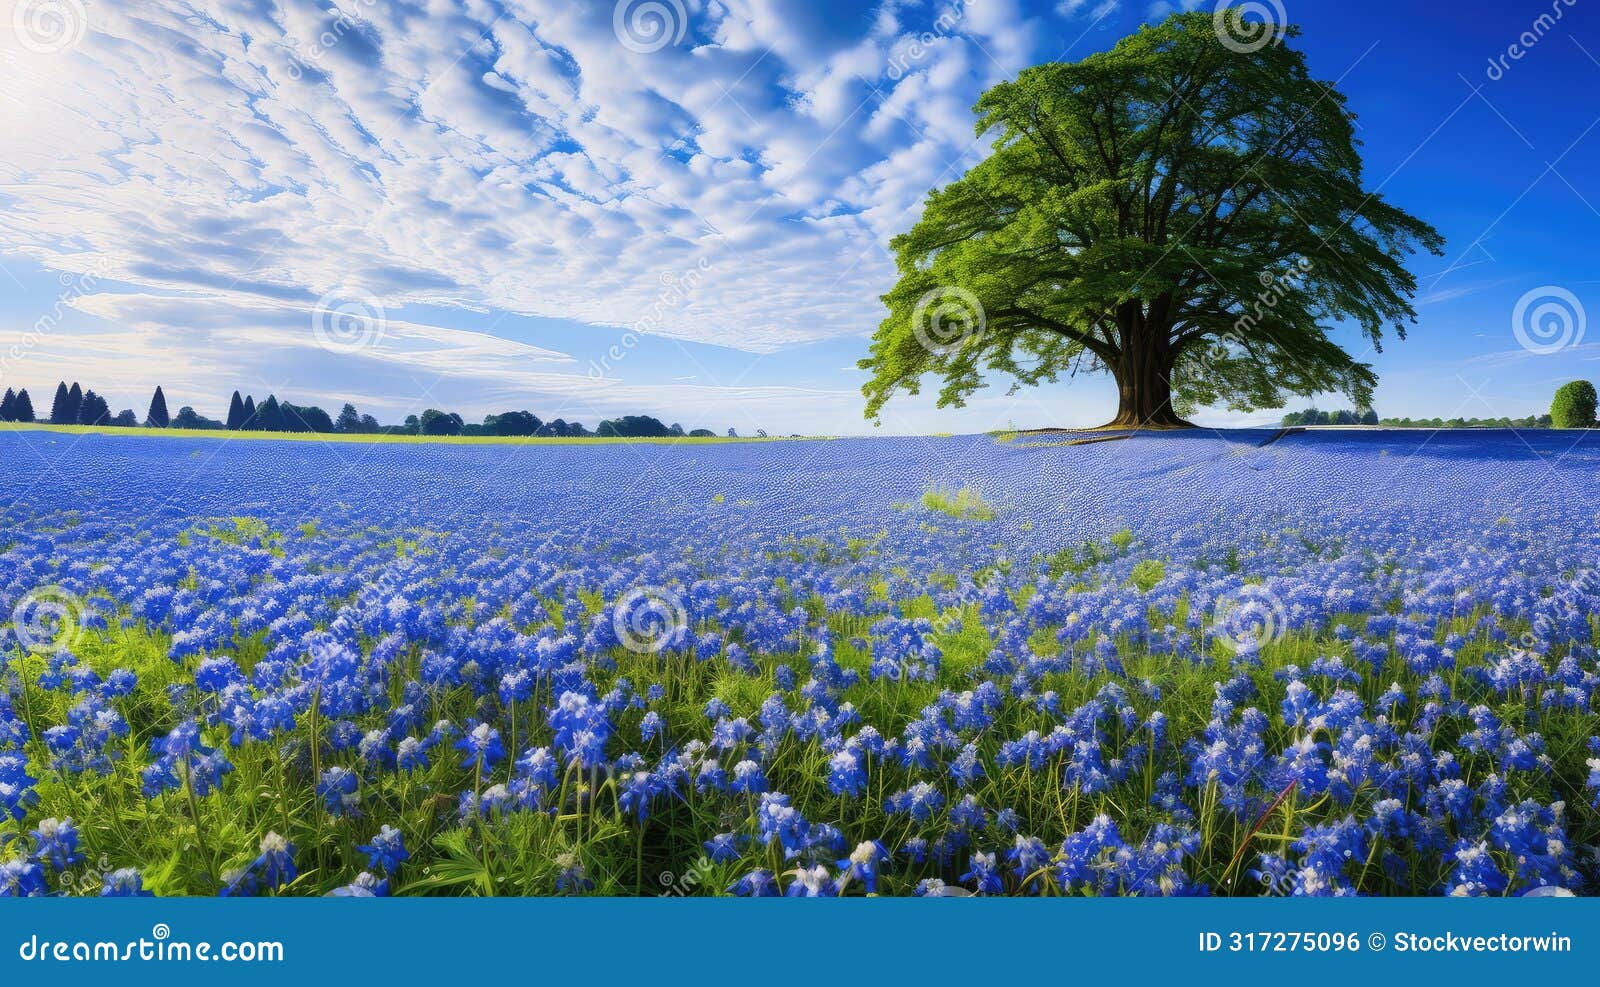 cerulean background blue summer